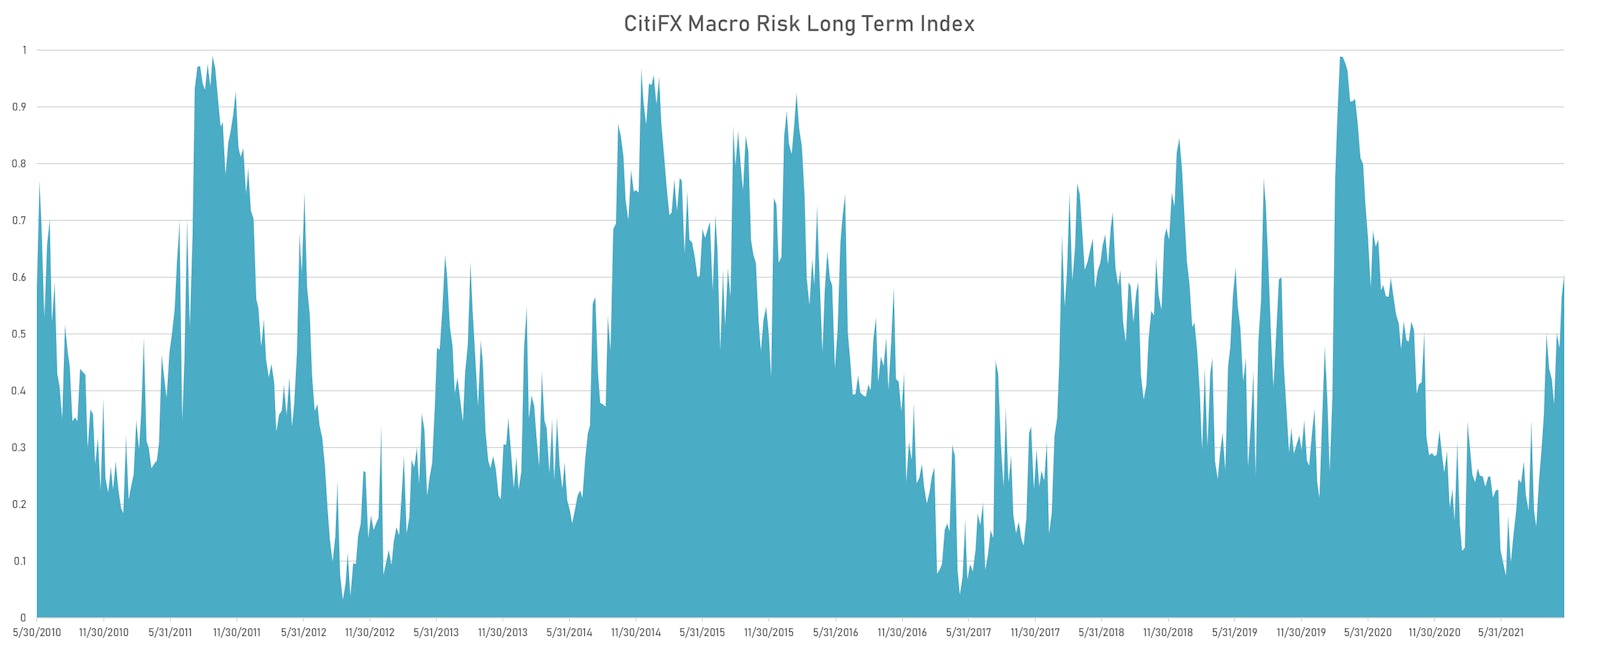 CitiFX Long-Term Macro Risk Index | Sources: ϕpost, Refinitiv data